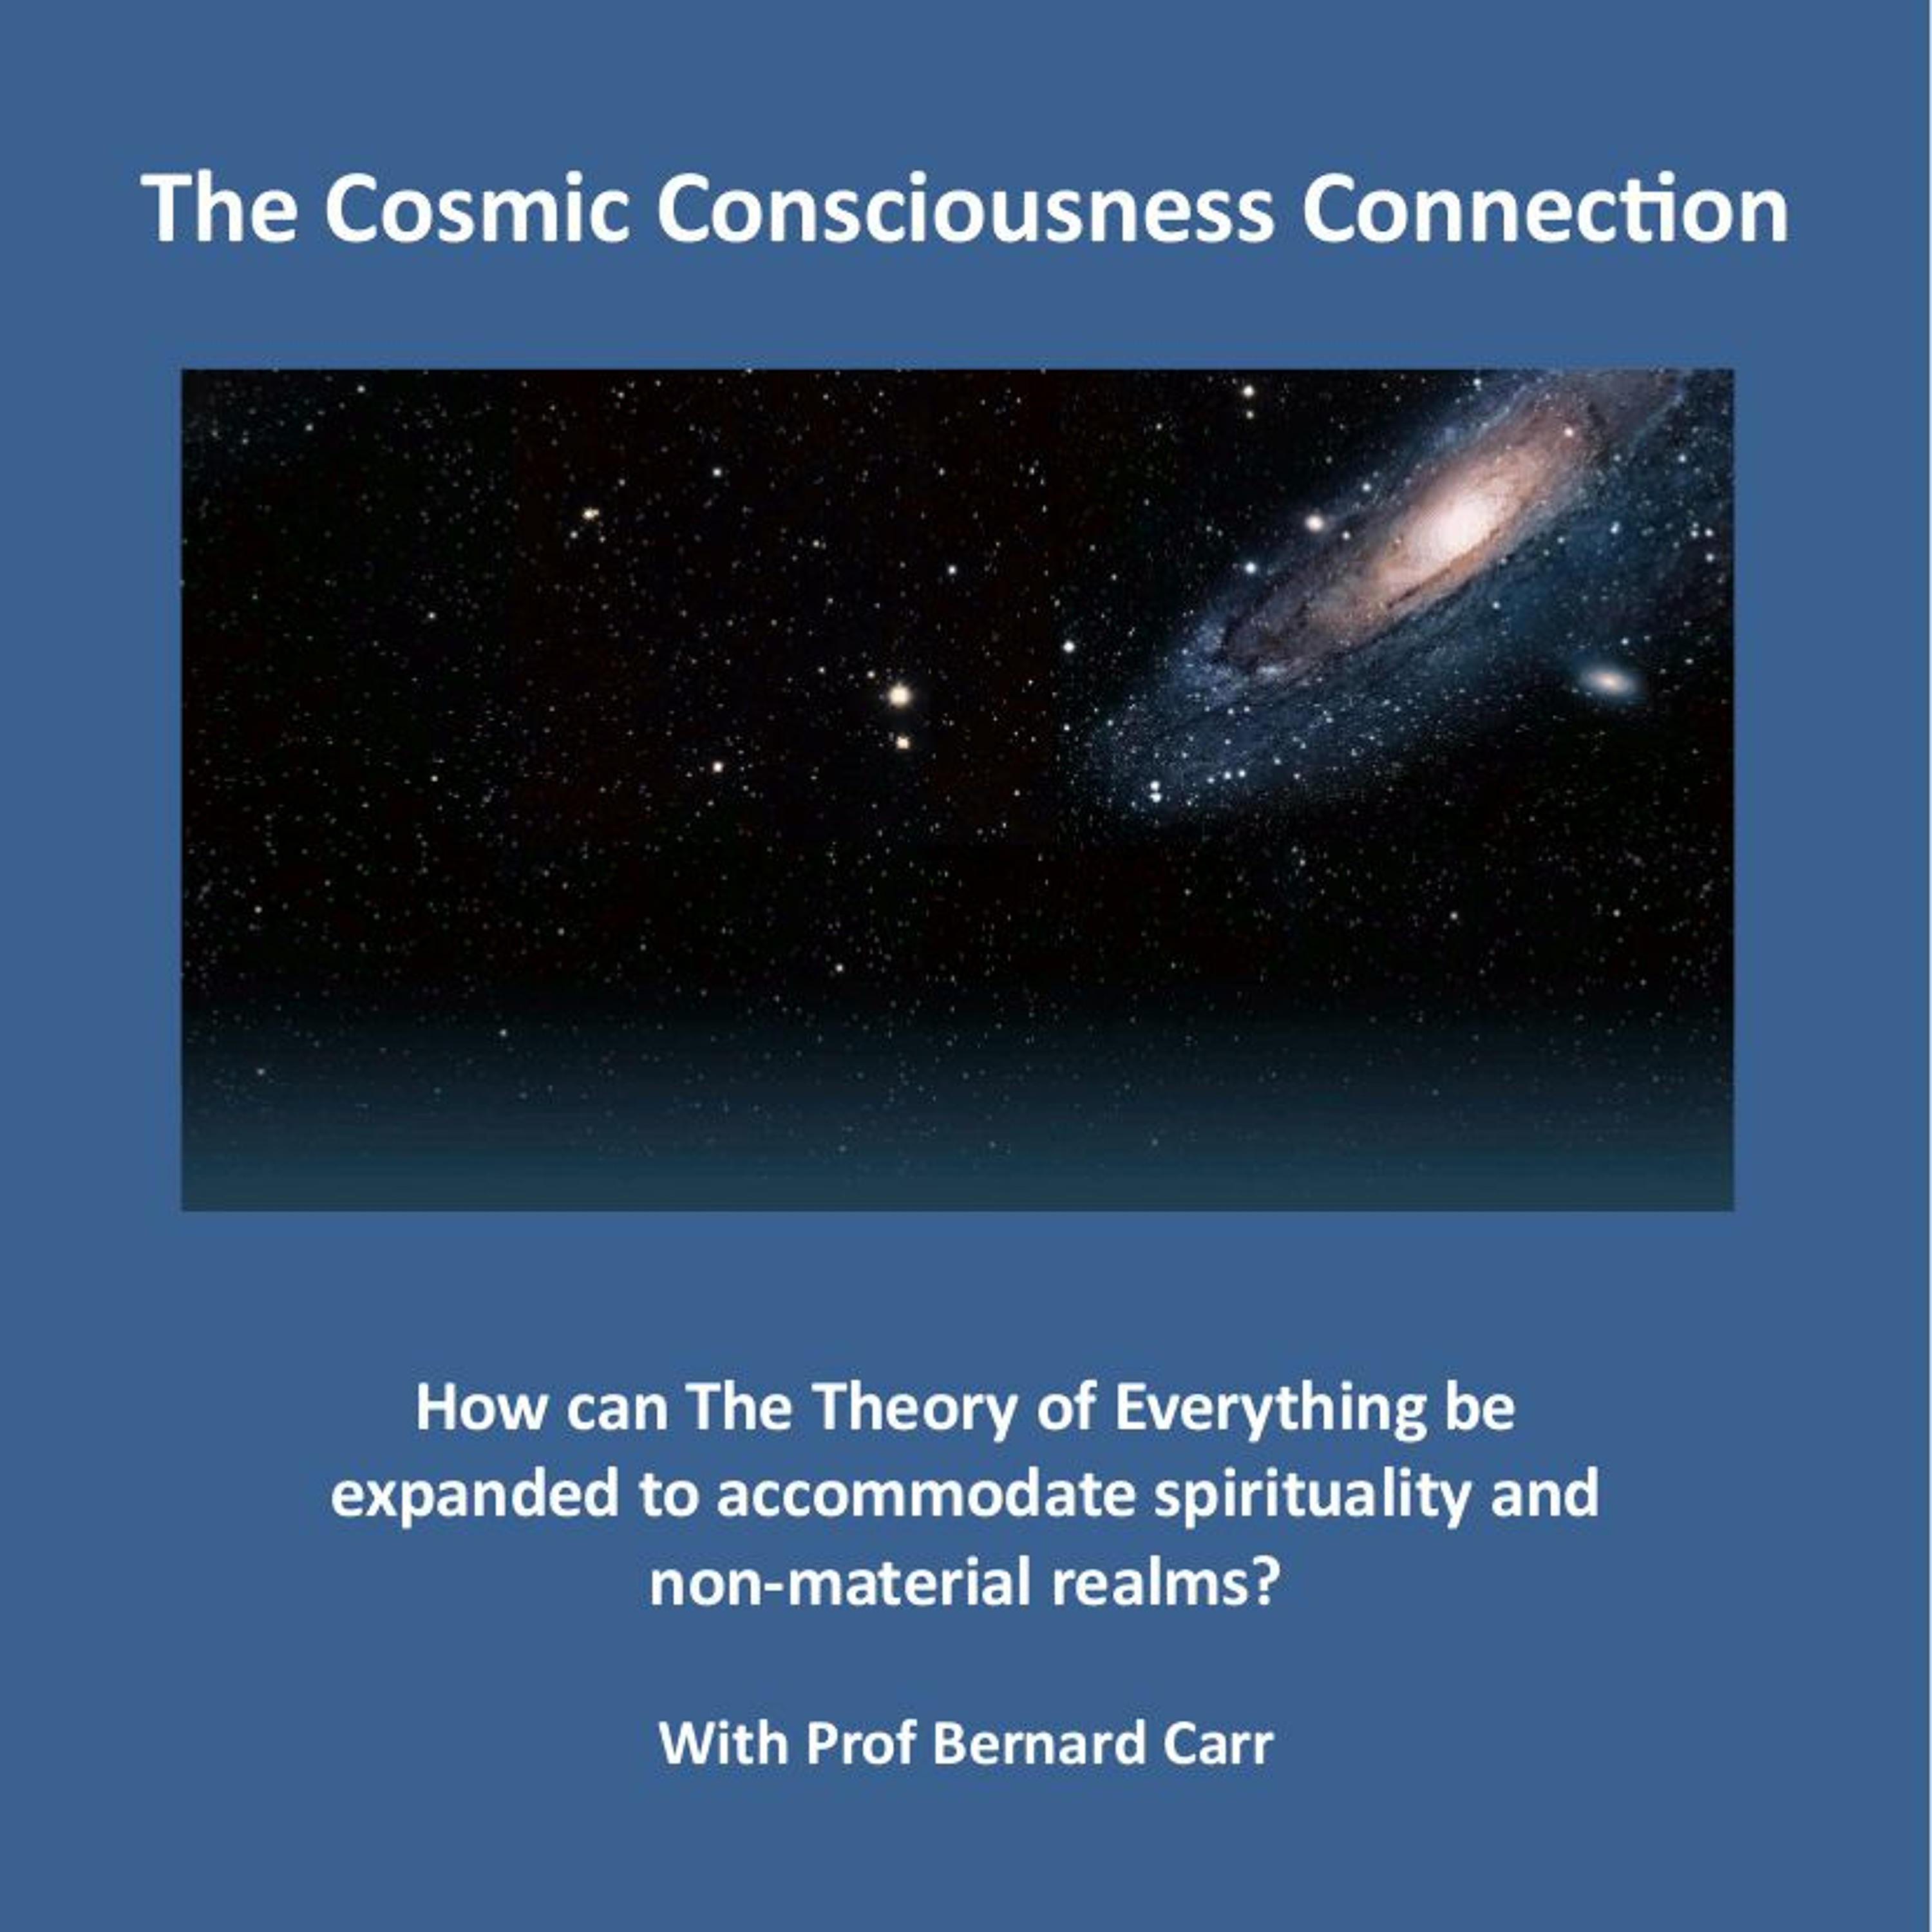 The Cosmic Consciousness Connection. Bernard Carr. 19.09.18